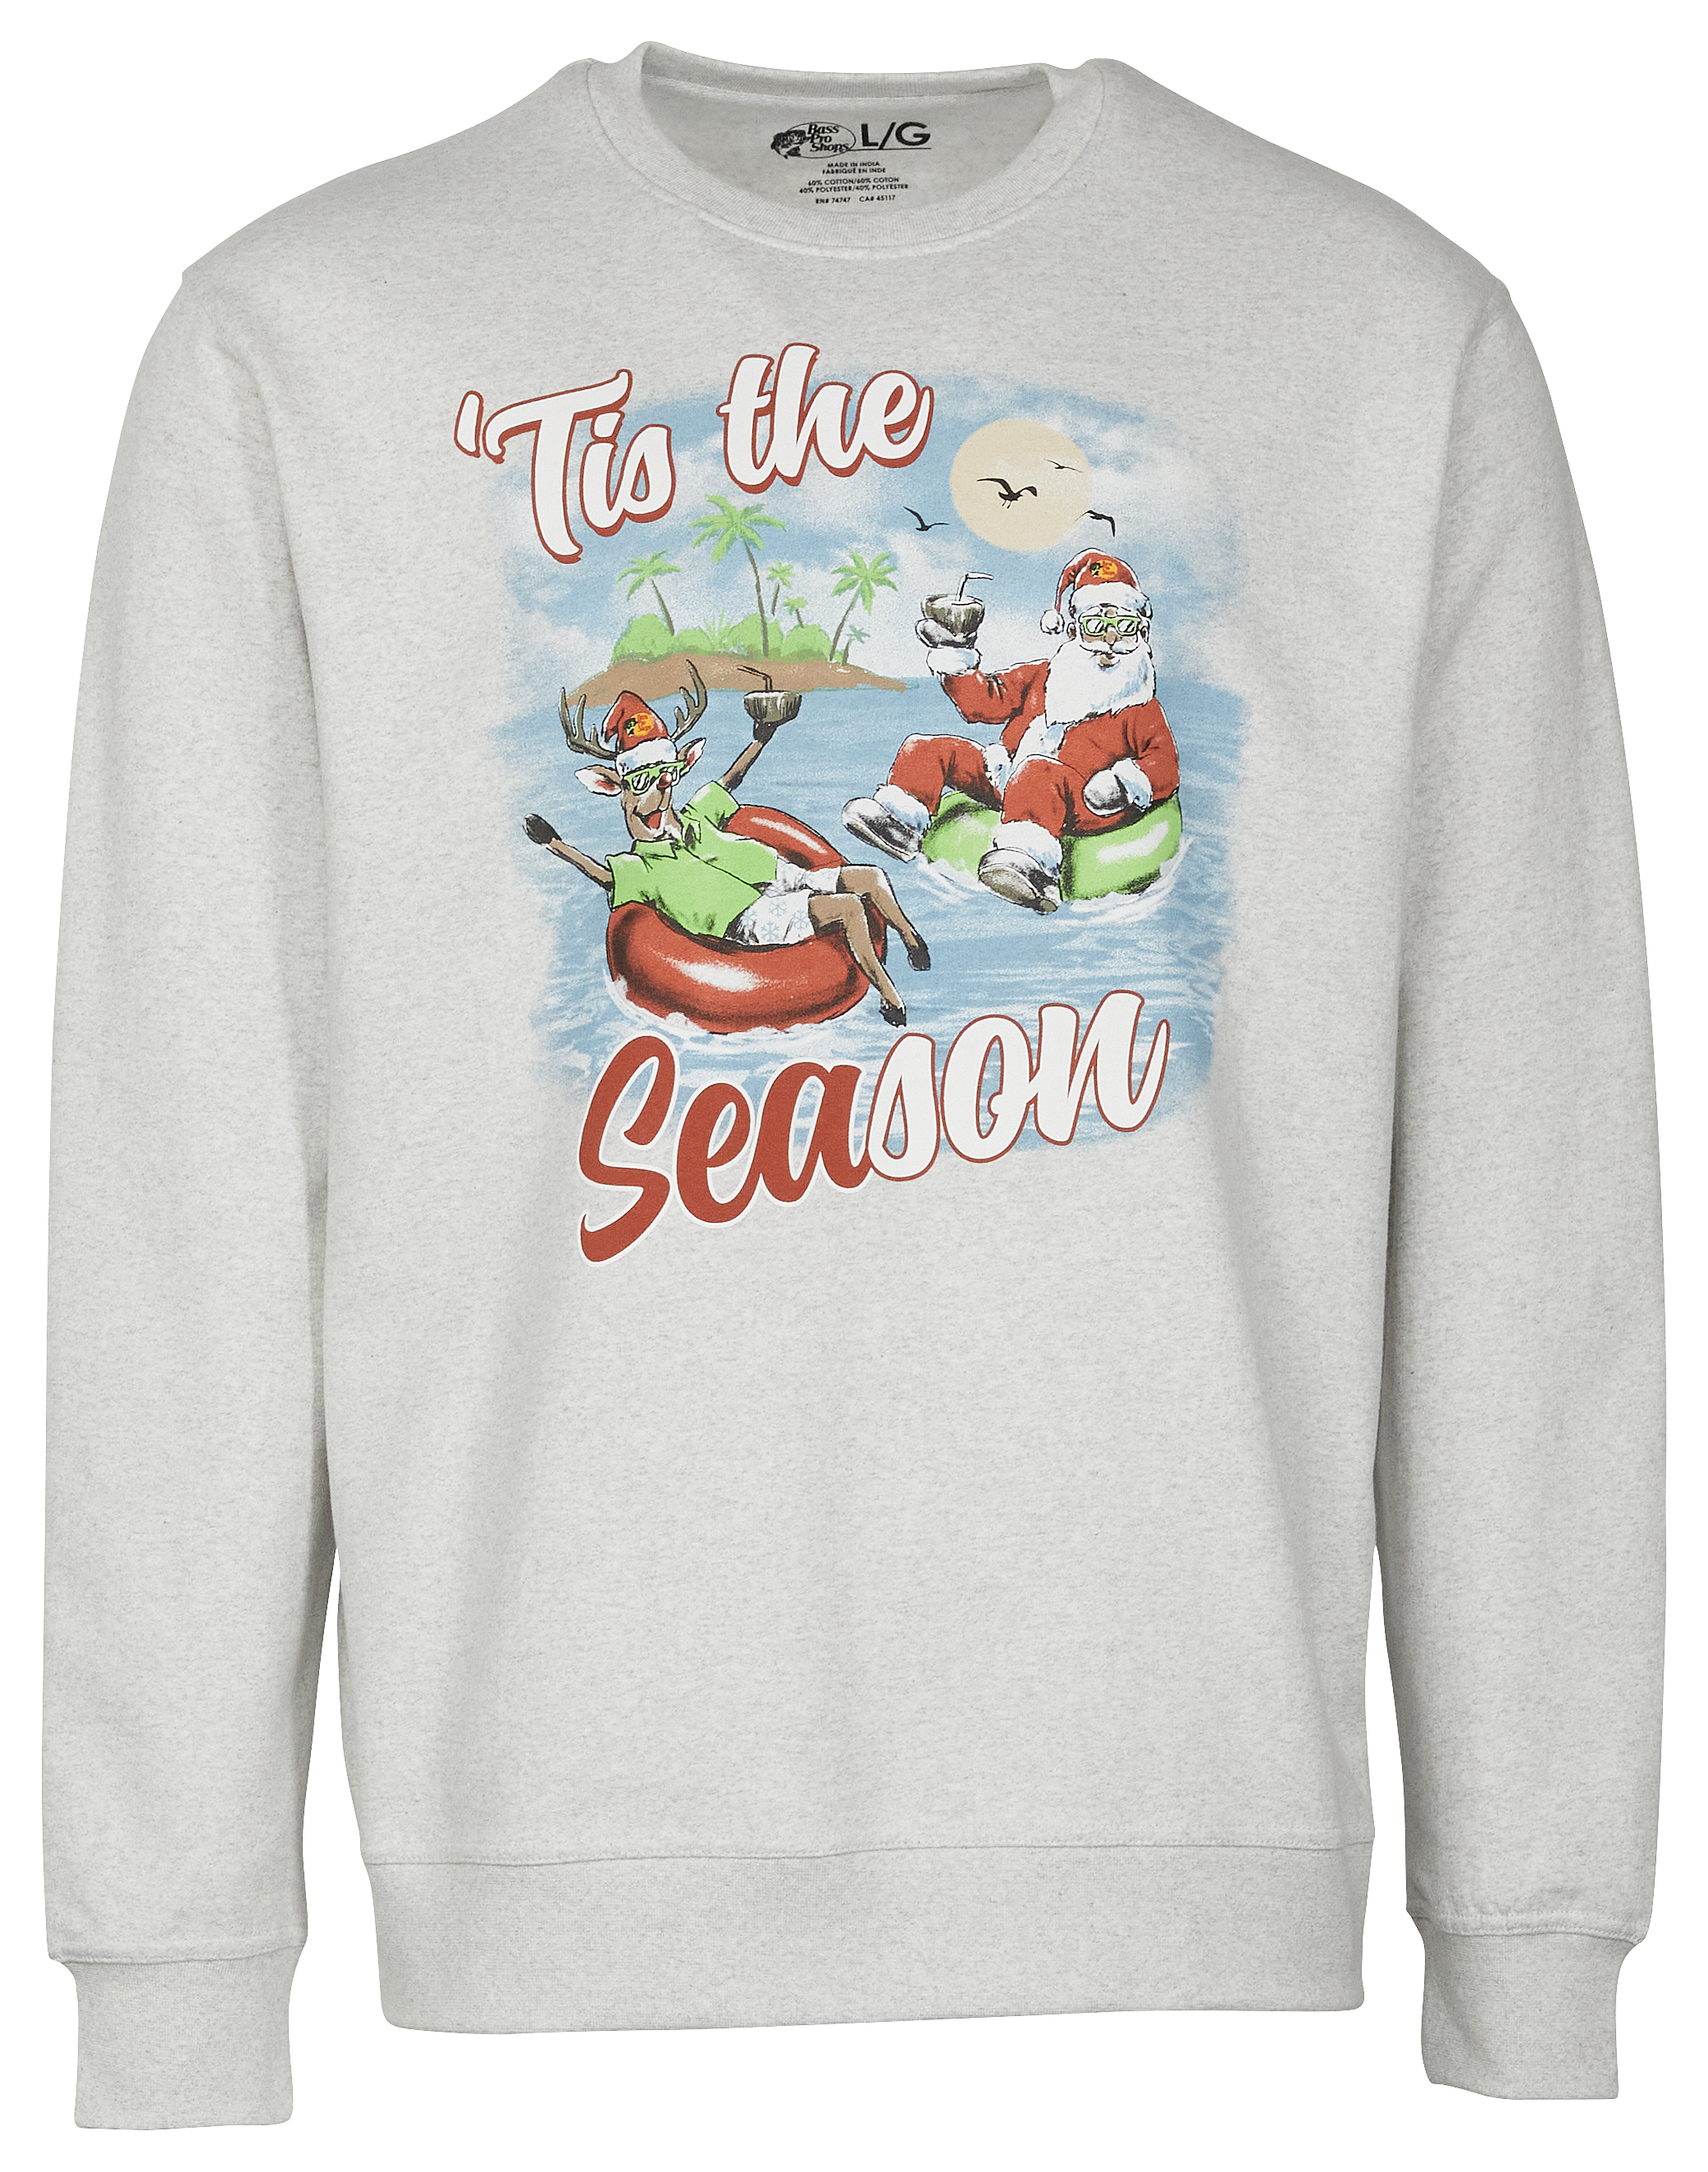 Bass Pro Shops 'Tis the Season Christmas Sweatshirt for Adults